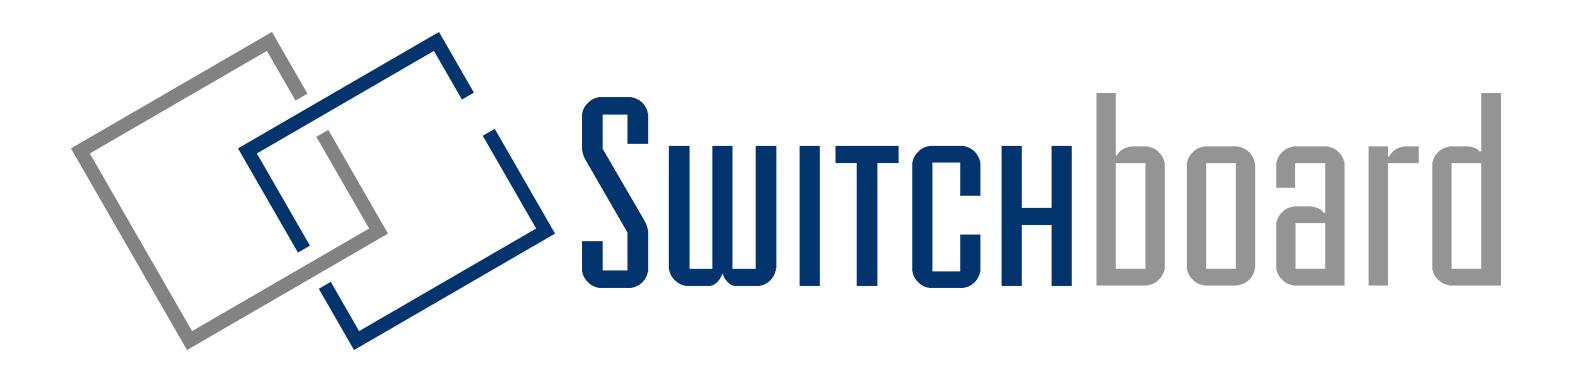 Switchboard-Horizontal logo